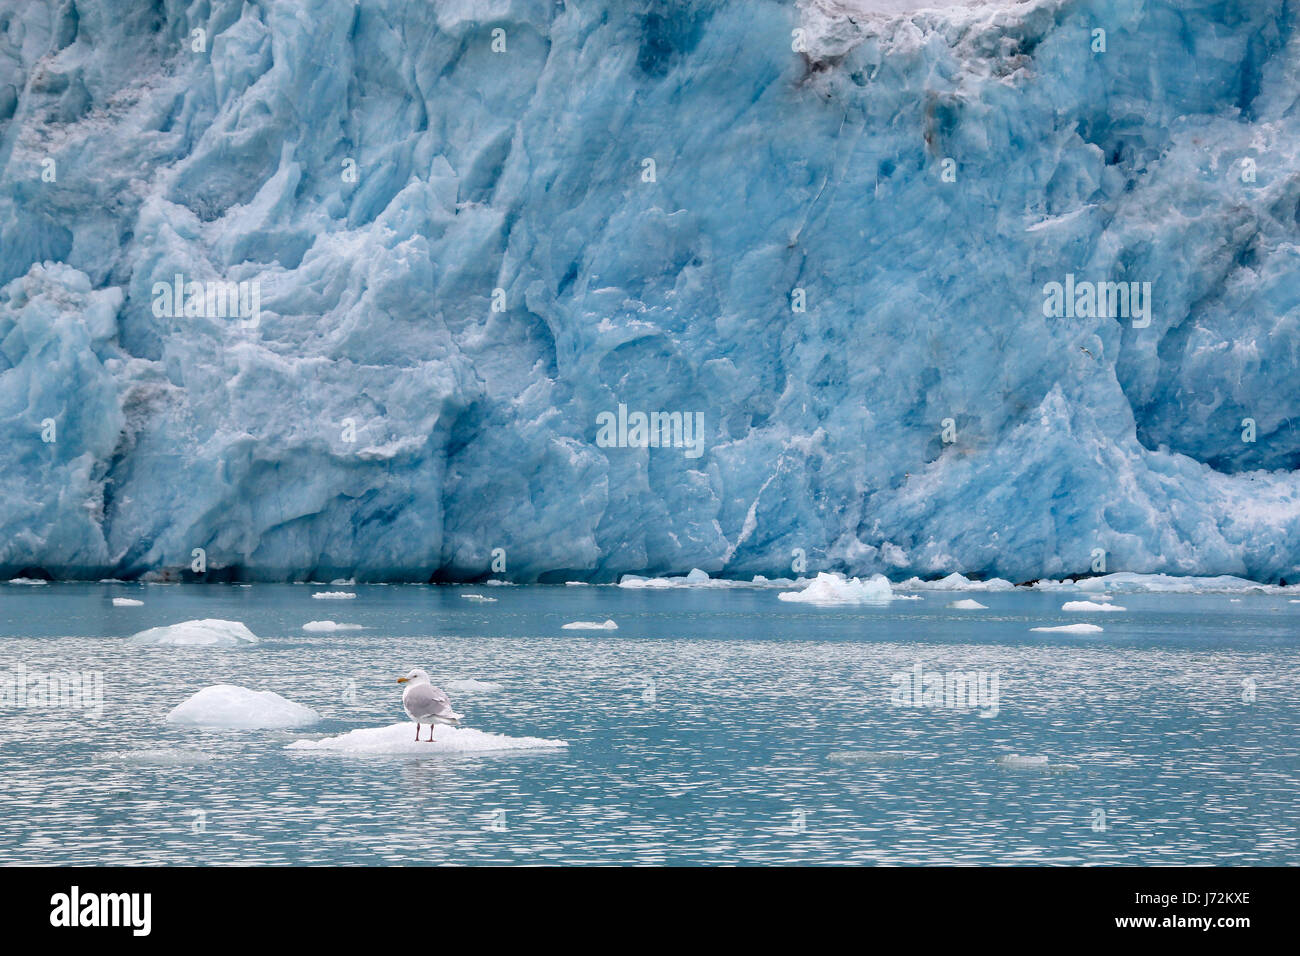 Arctic ice glacier blu ambiente ambiente vasto deserto di ghiaccio artico Foto Stock